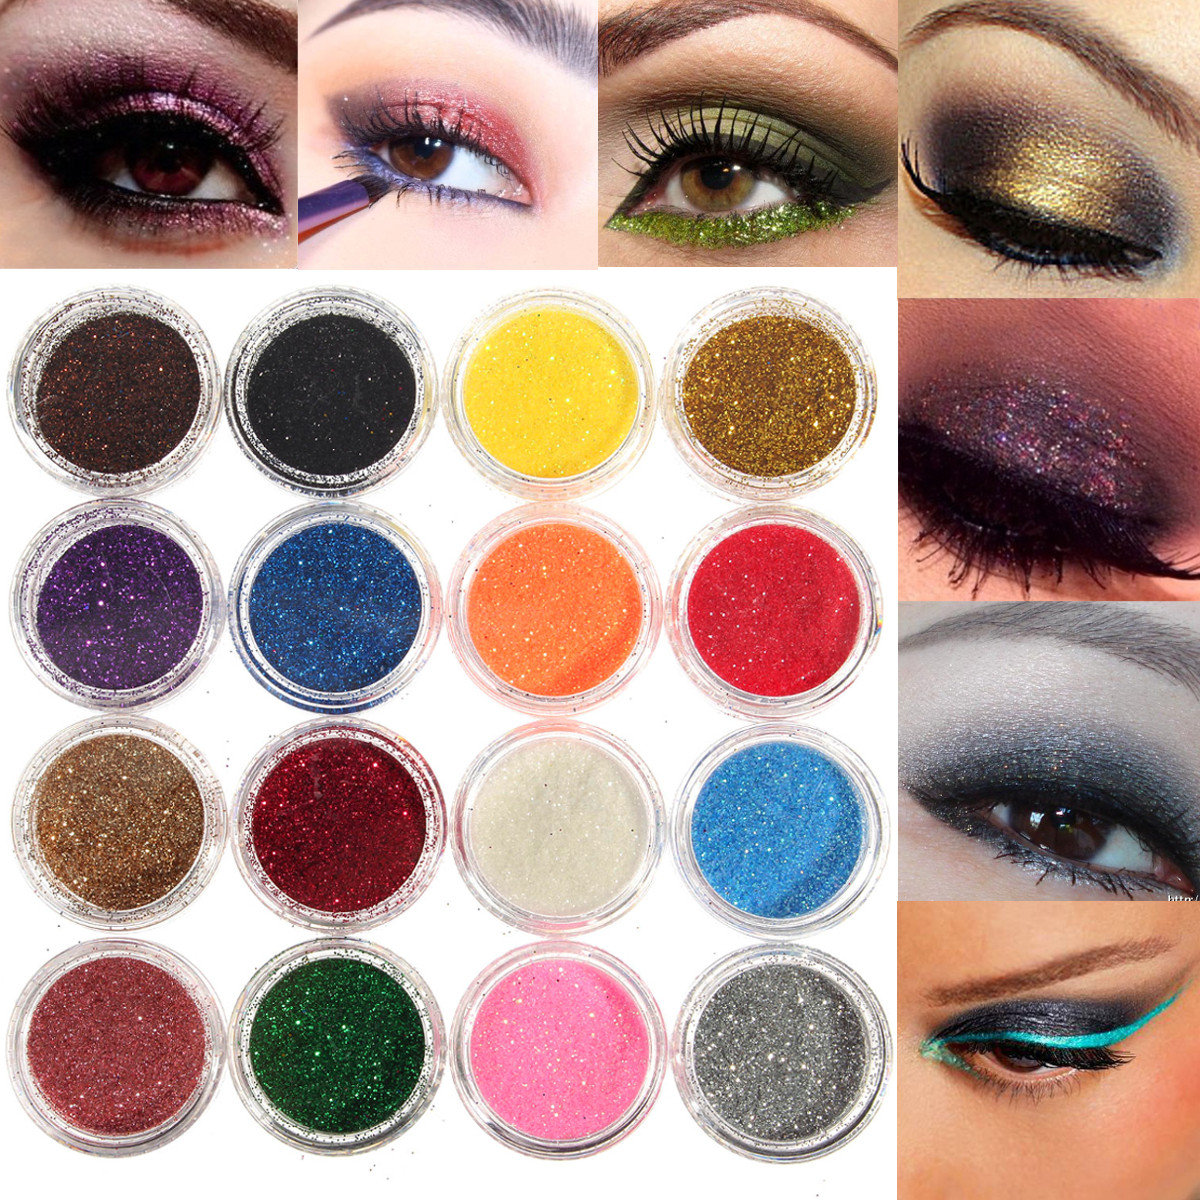 

16 Mixed Colors Glitter Powder Eyeshadow Makeup Smoked Eye Shadow Cosmetics Set